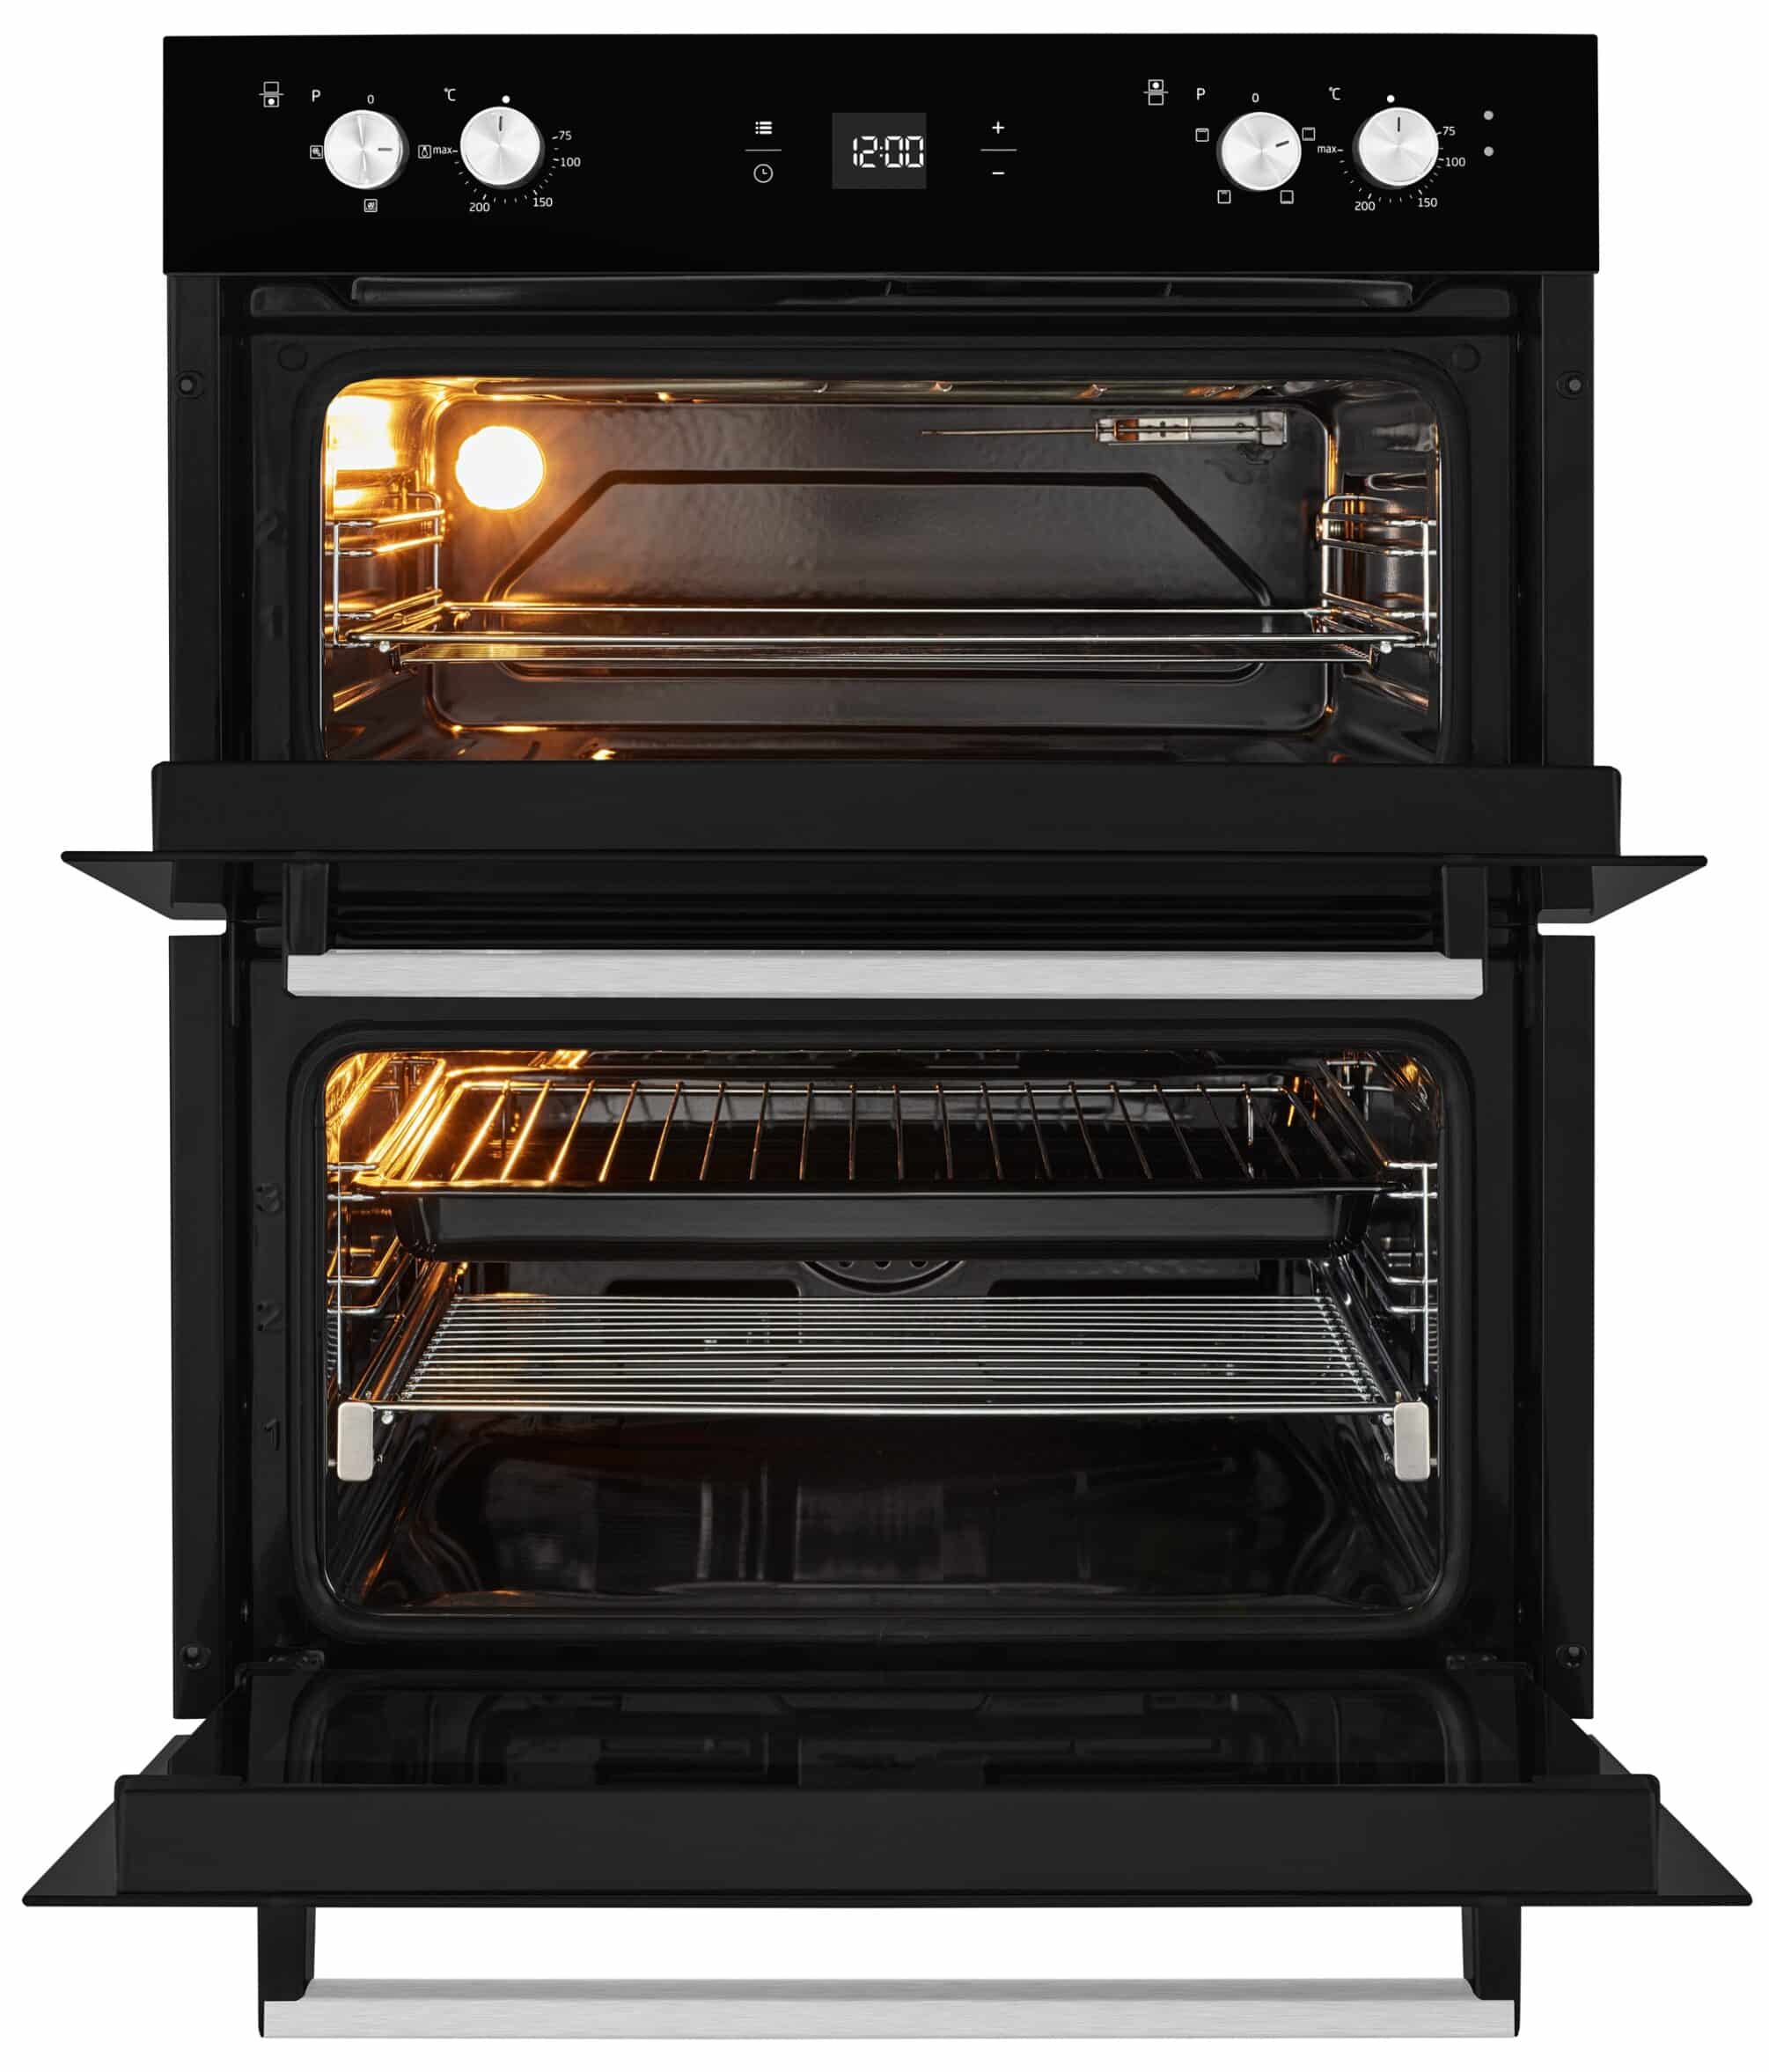 Beko BTQF24300B Black Built-in Double oven - 715mm H - 3336